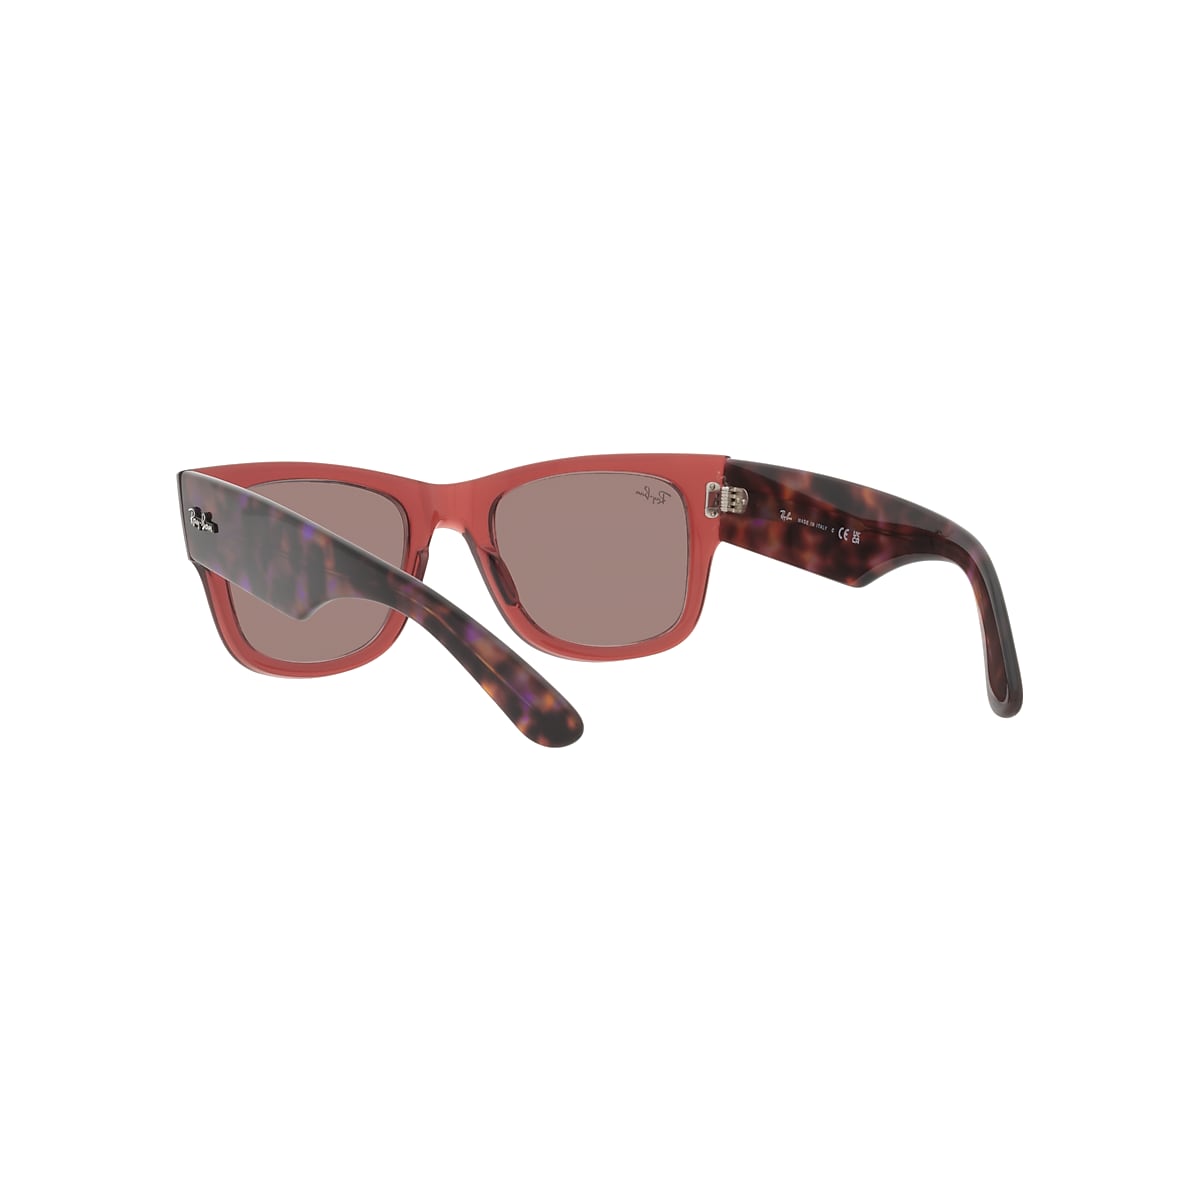 Ray-Ban Mega Wayfarer Sunglasses Striped Pink Havana Frame Red Lenses 51-21